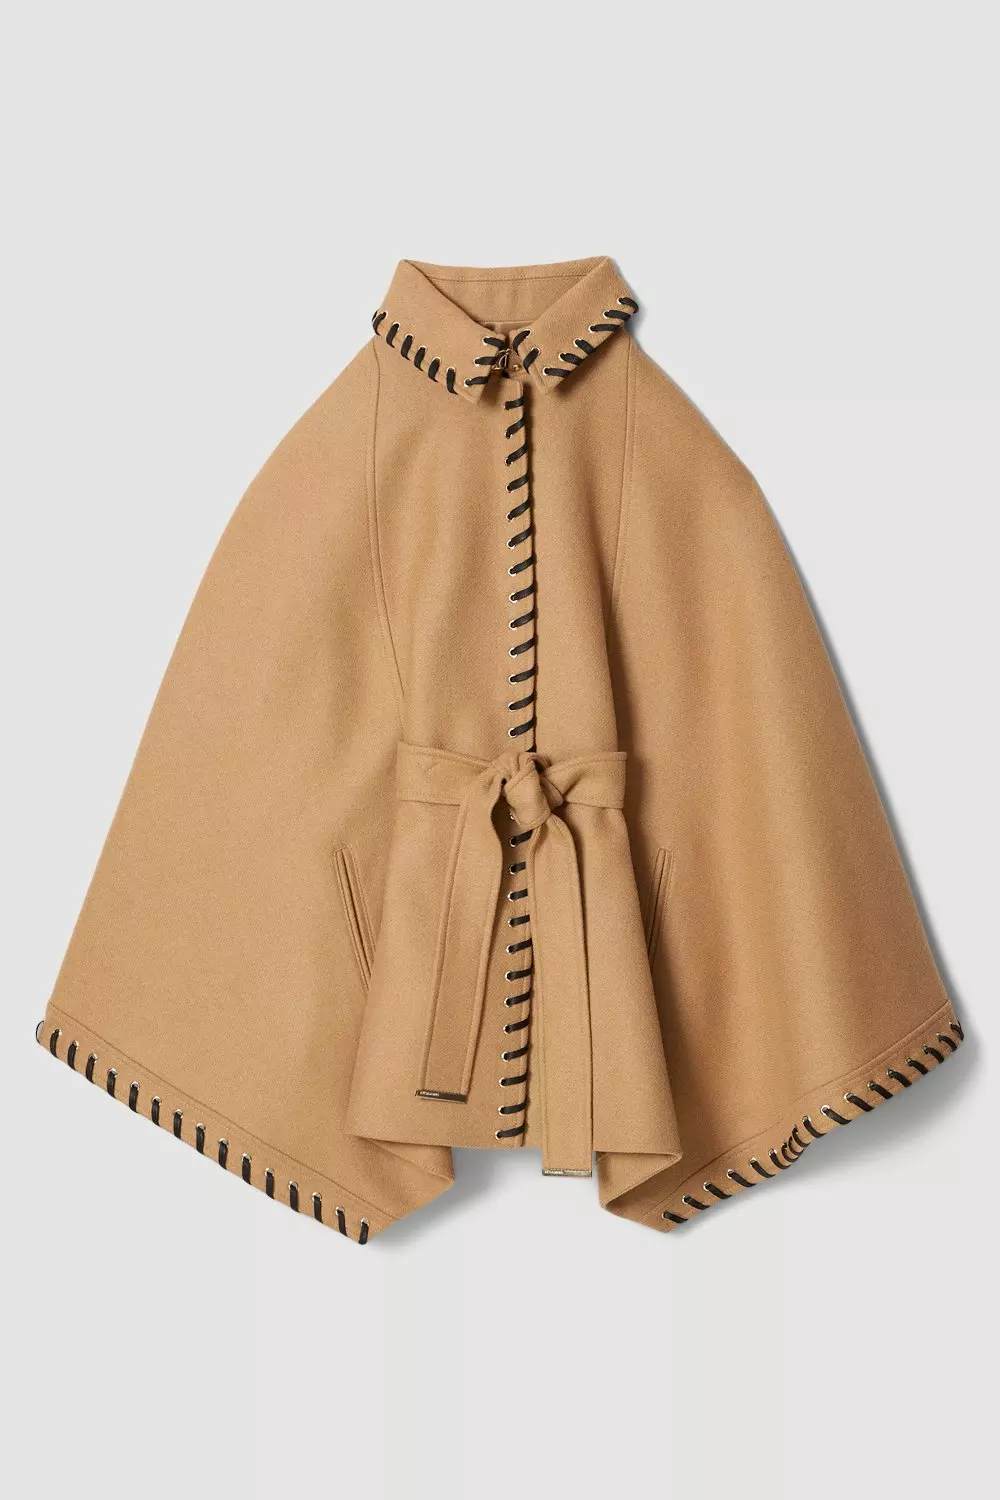 Louis Vuitton - Belted Double Face Hooded Wrap Coat - Camel - Women - Size: 40 - Luxury